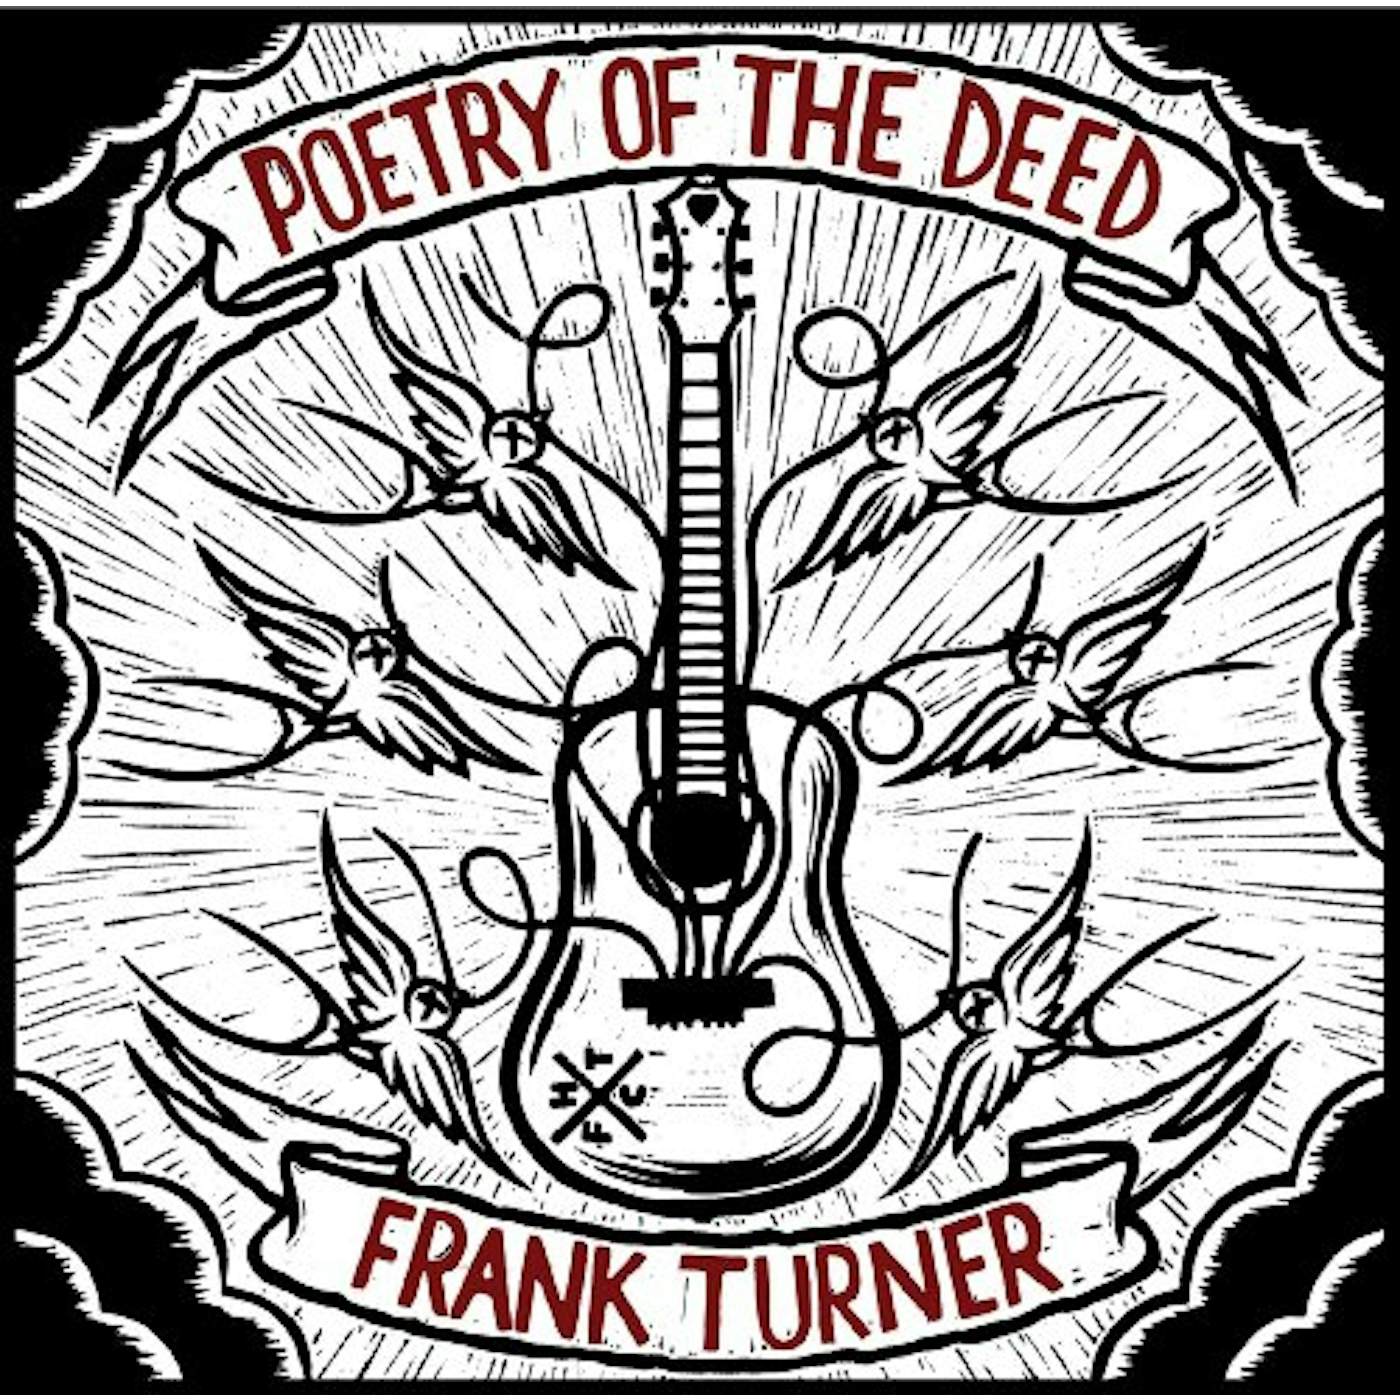 Frank Turner Poetry of the Deed Vinyl Record